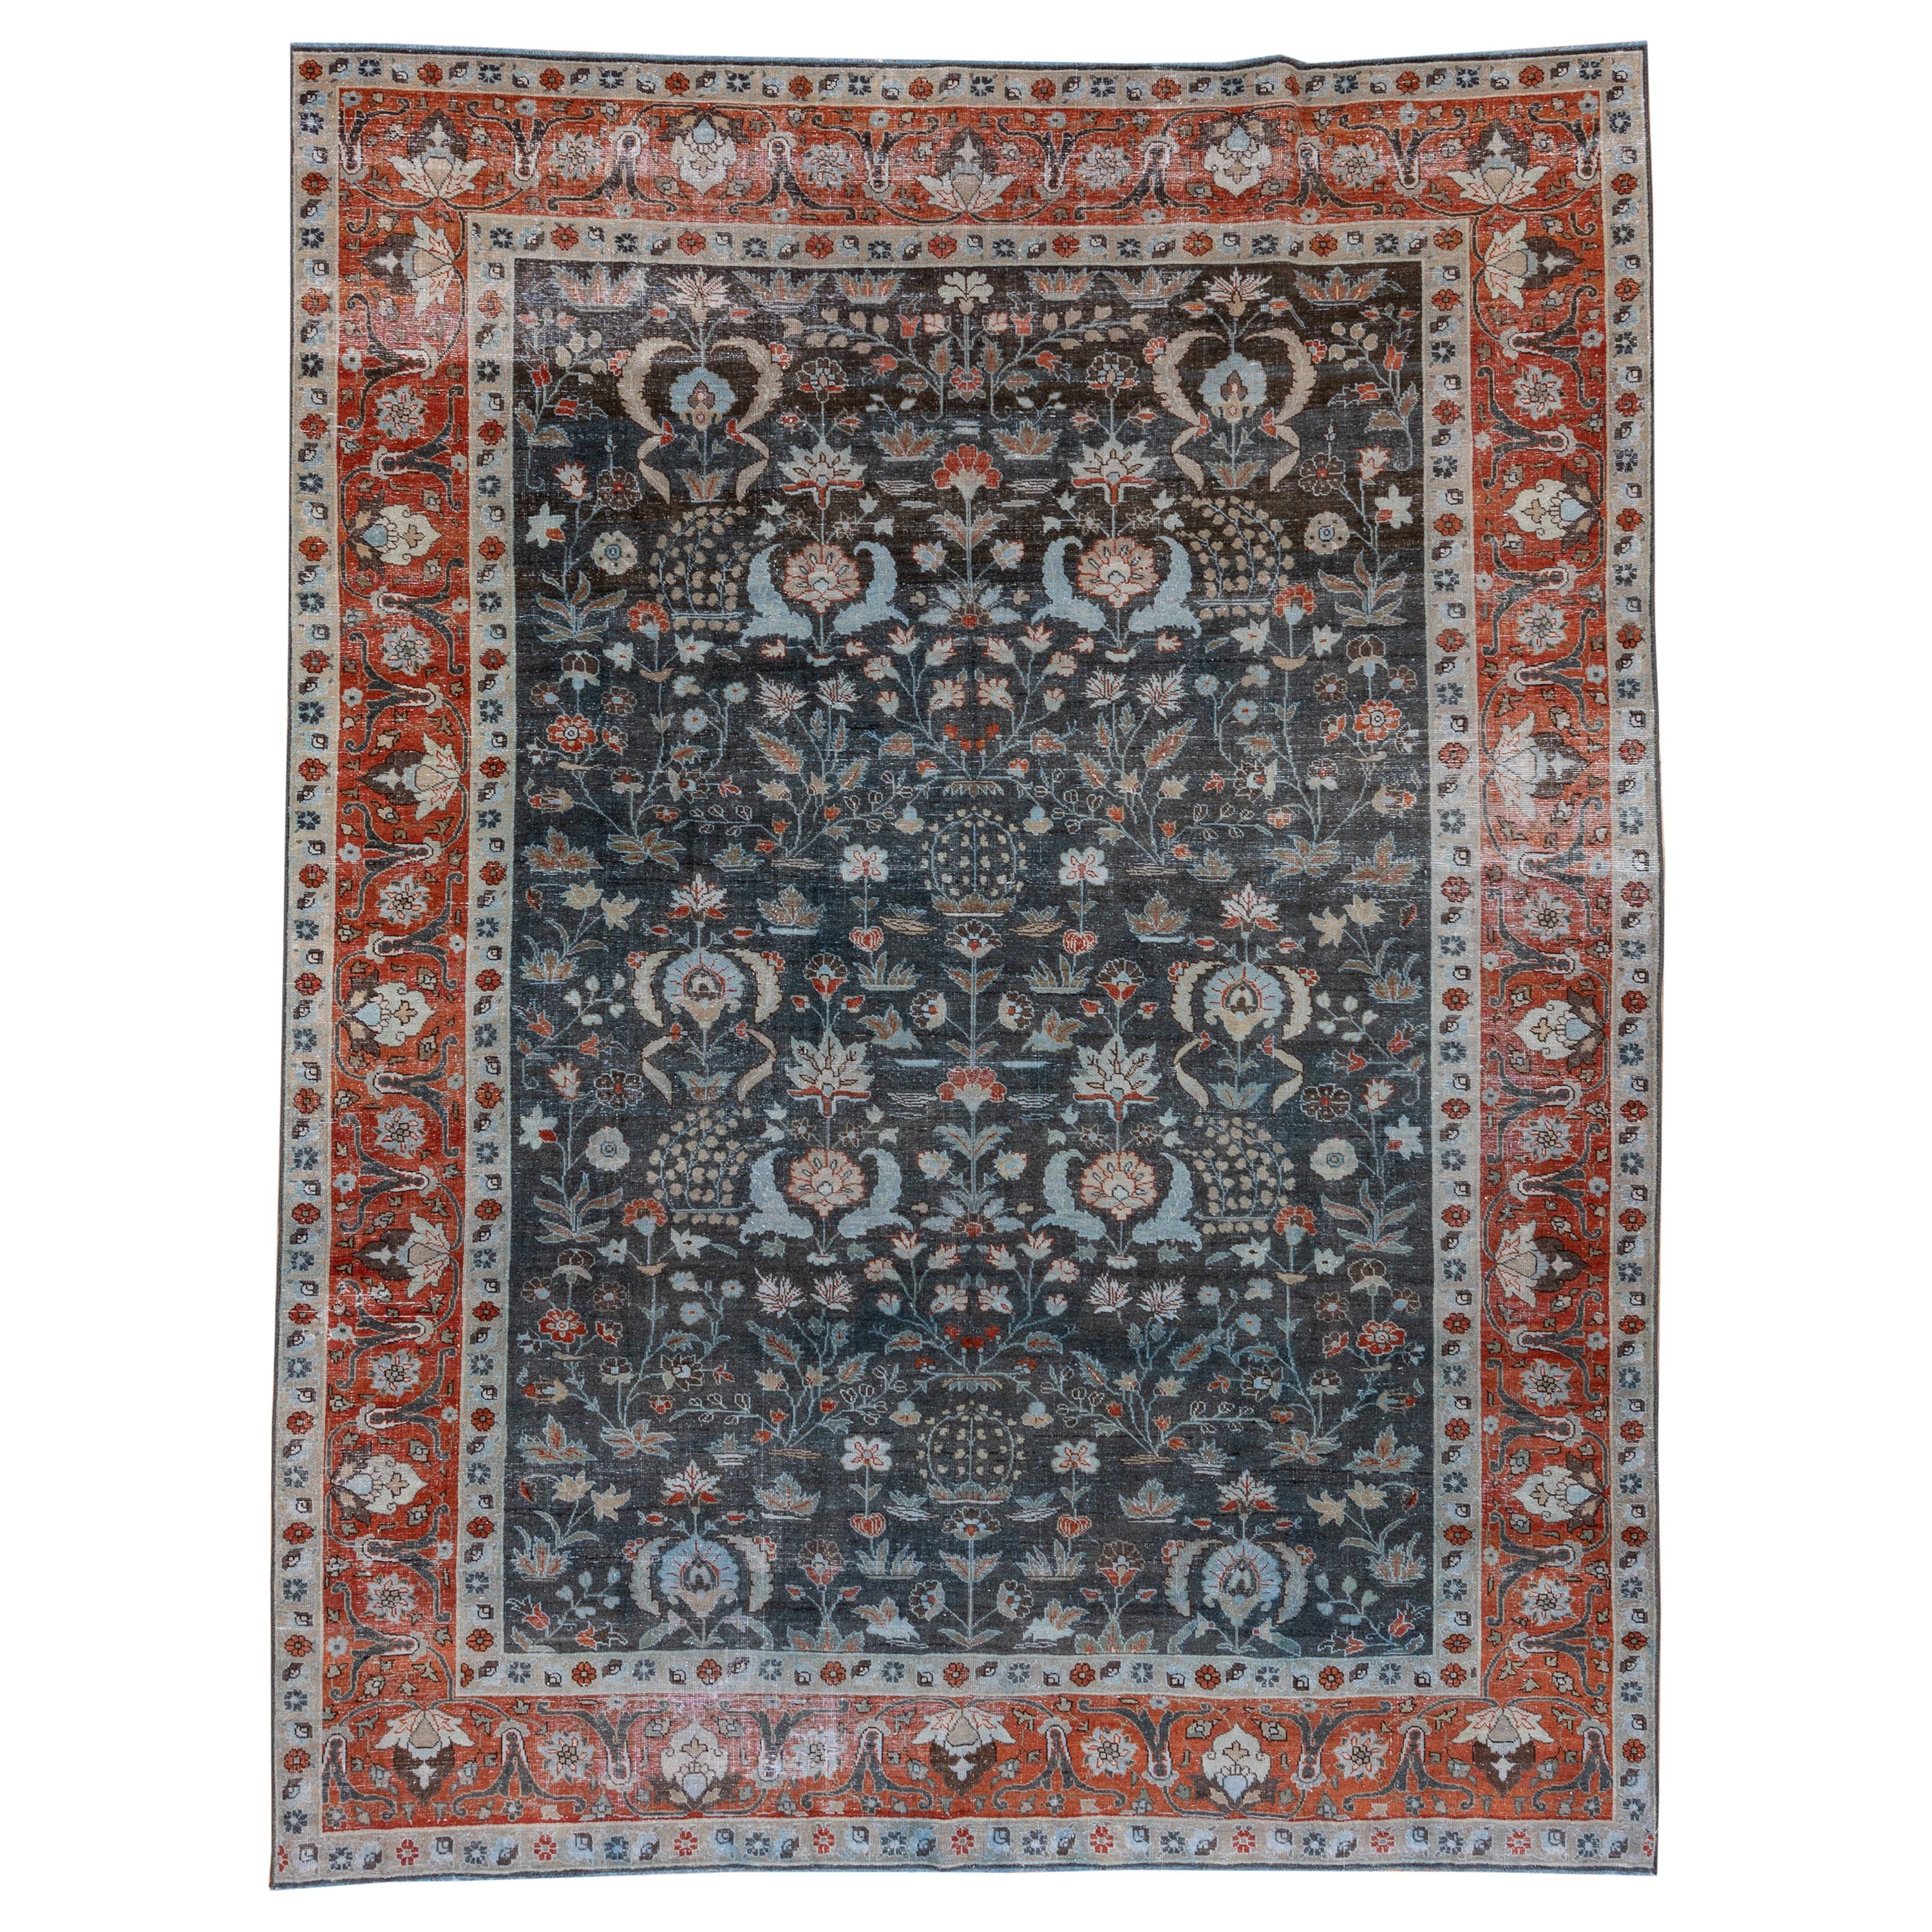 Antiker persischer Täbris-Teppich, blau-grünes Feld, mehrfarbige Doppelbordüren